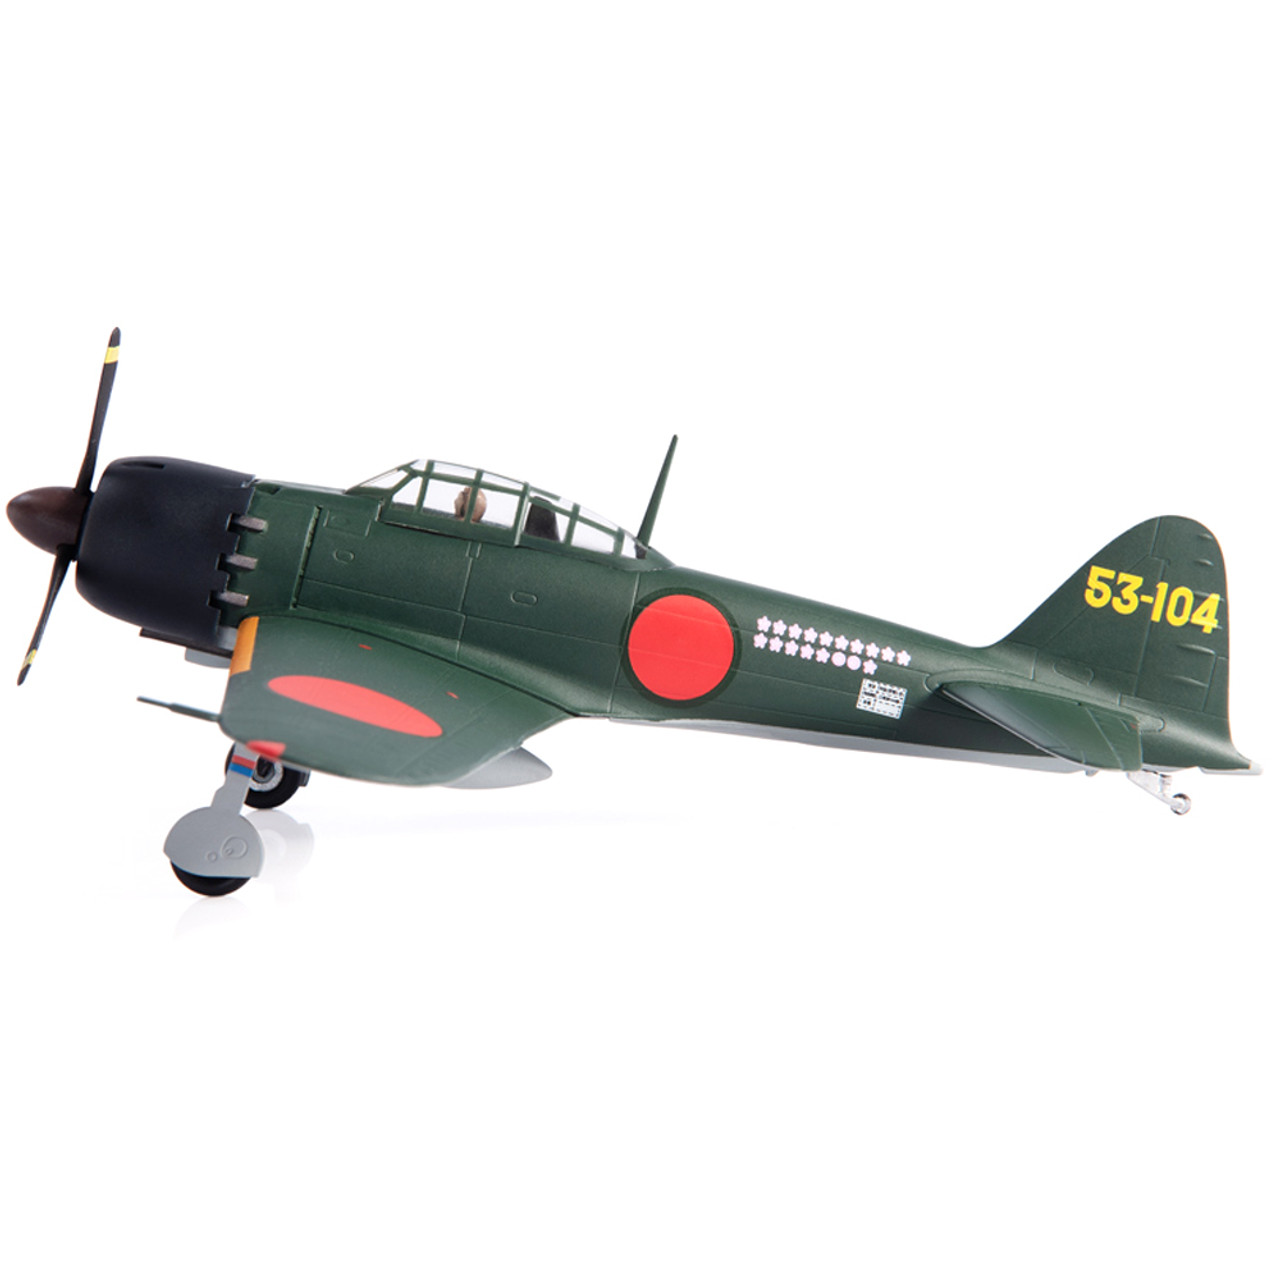 1/72 JC Wings 1944 Zero A6M5 W.O. Tetsuzo Iwamoto, Imperial Japanese Navy, 253rd Naval Flying Group Model